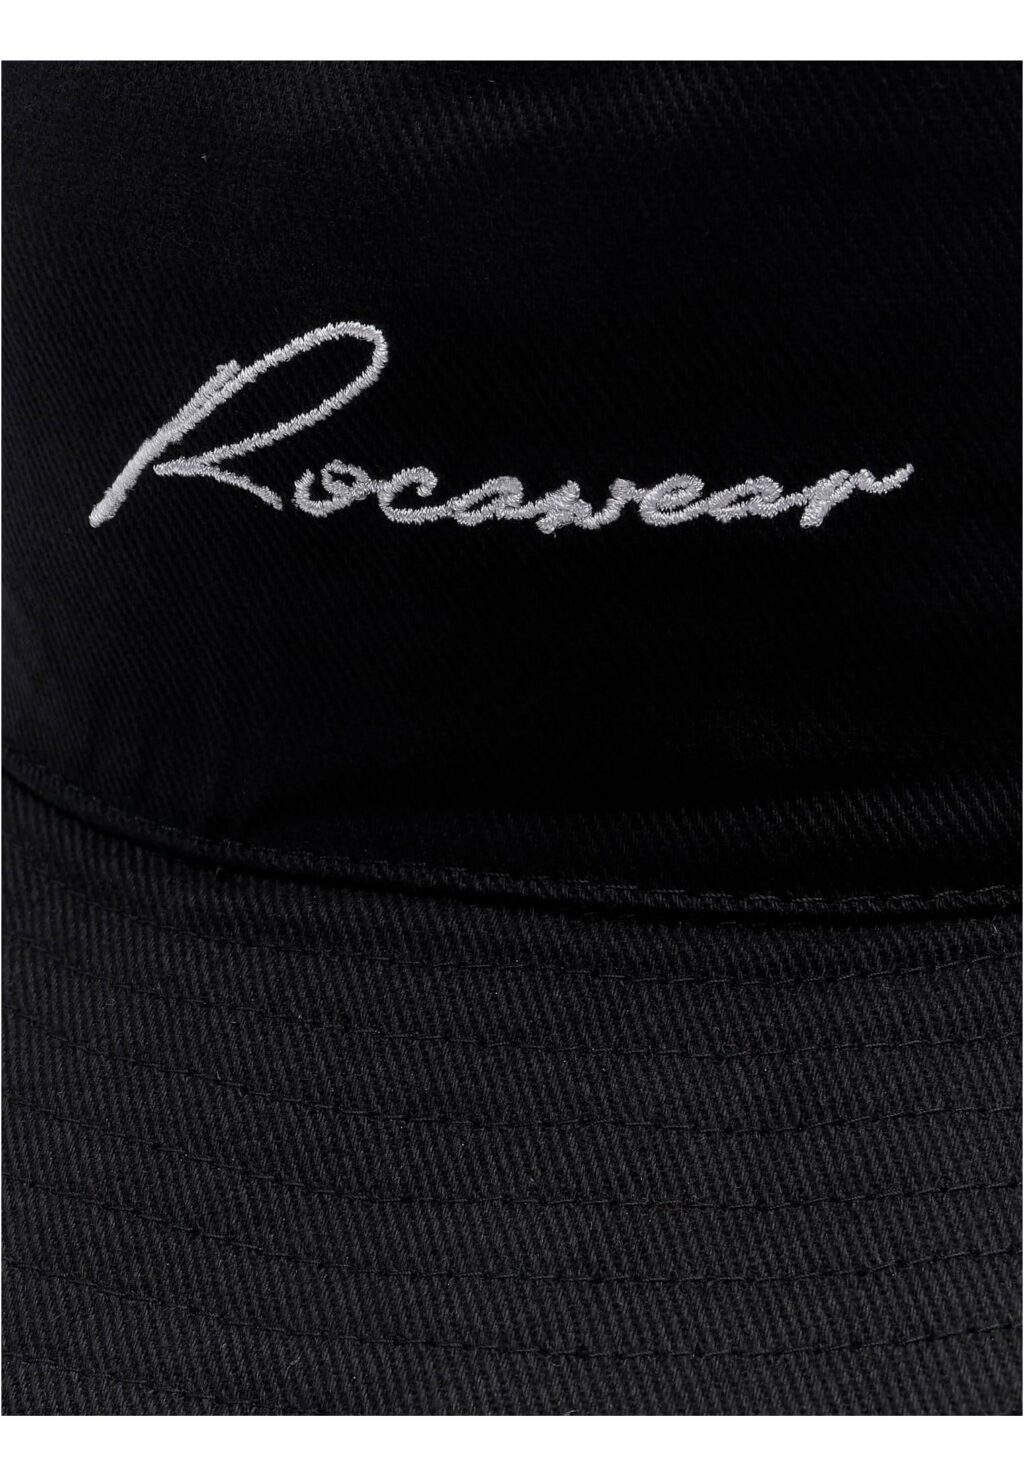 Rocawear Carino Bucket hat black one RWCA024